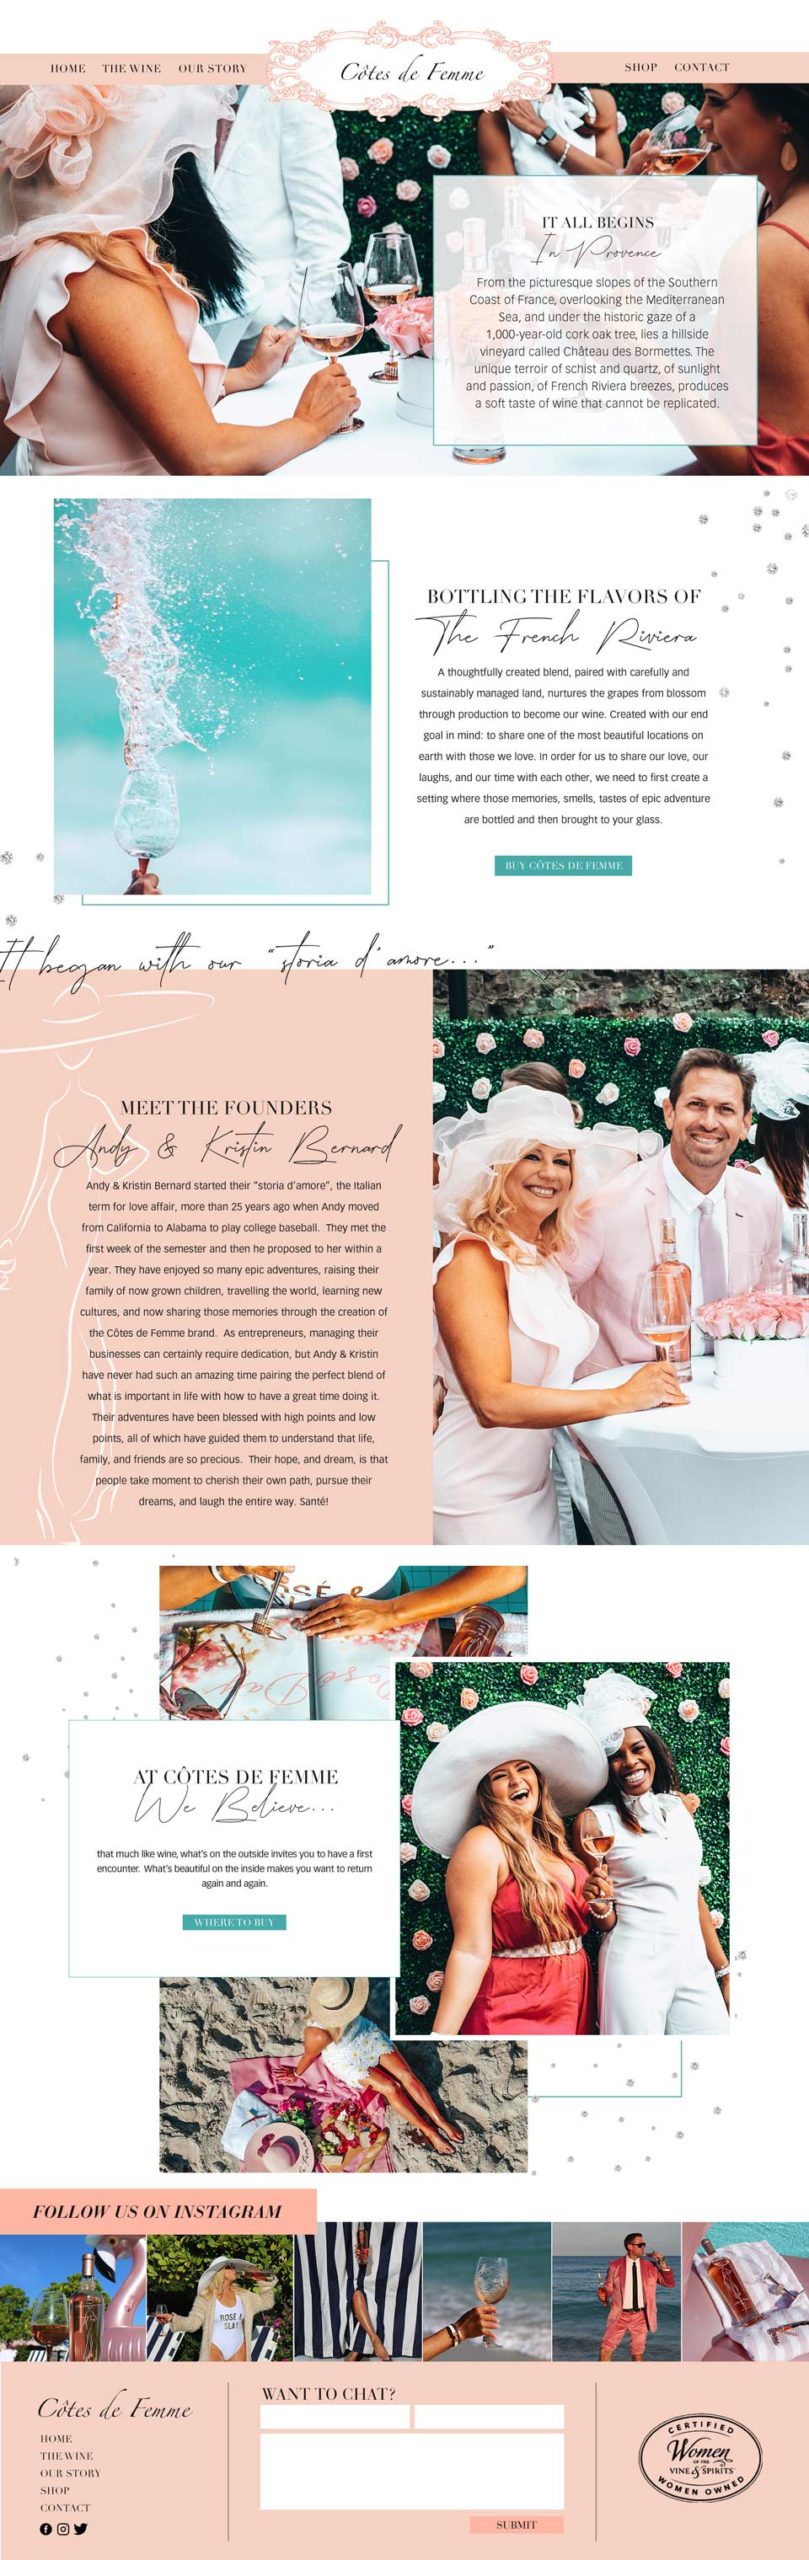 Côtes de Femme Wine Brand | Custom Website Design | Our Story Page | Wine brand custom website 